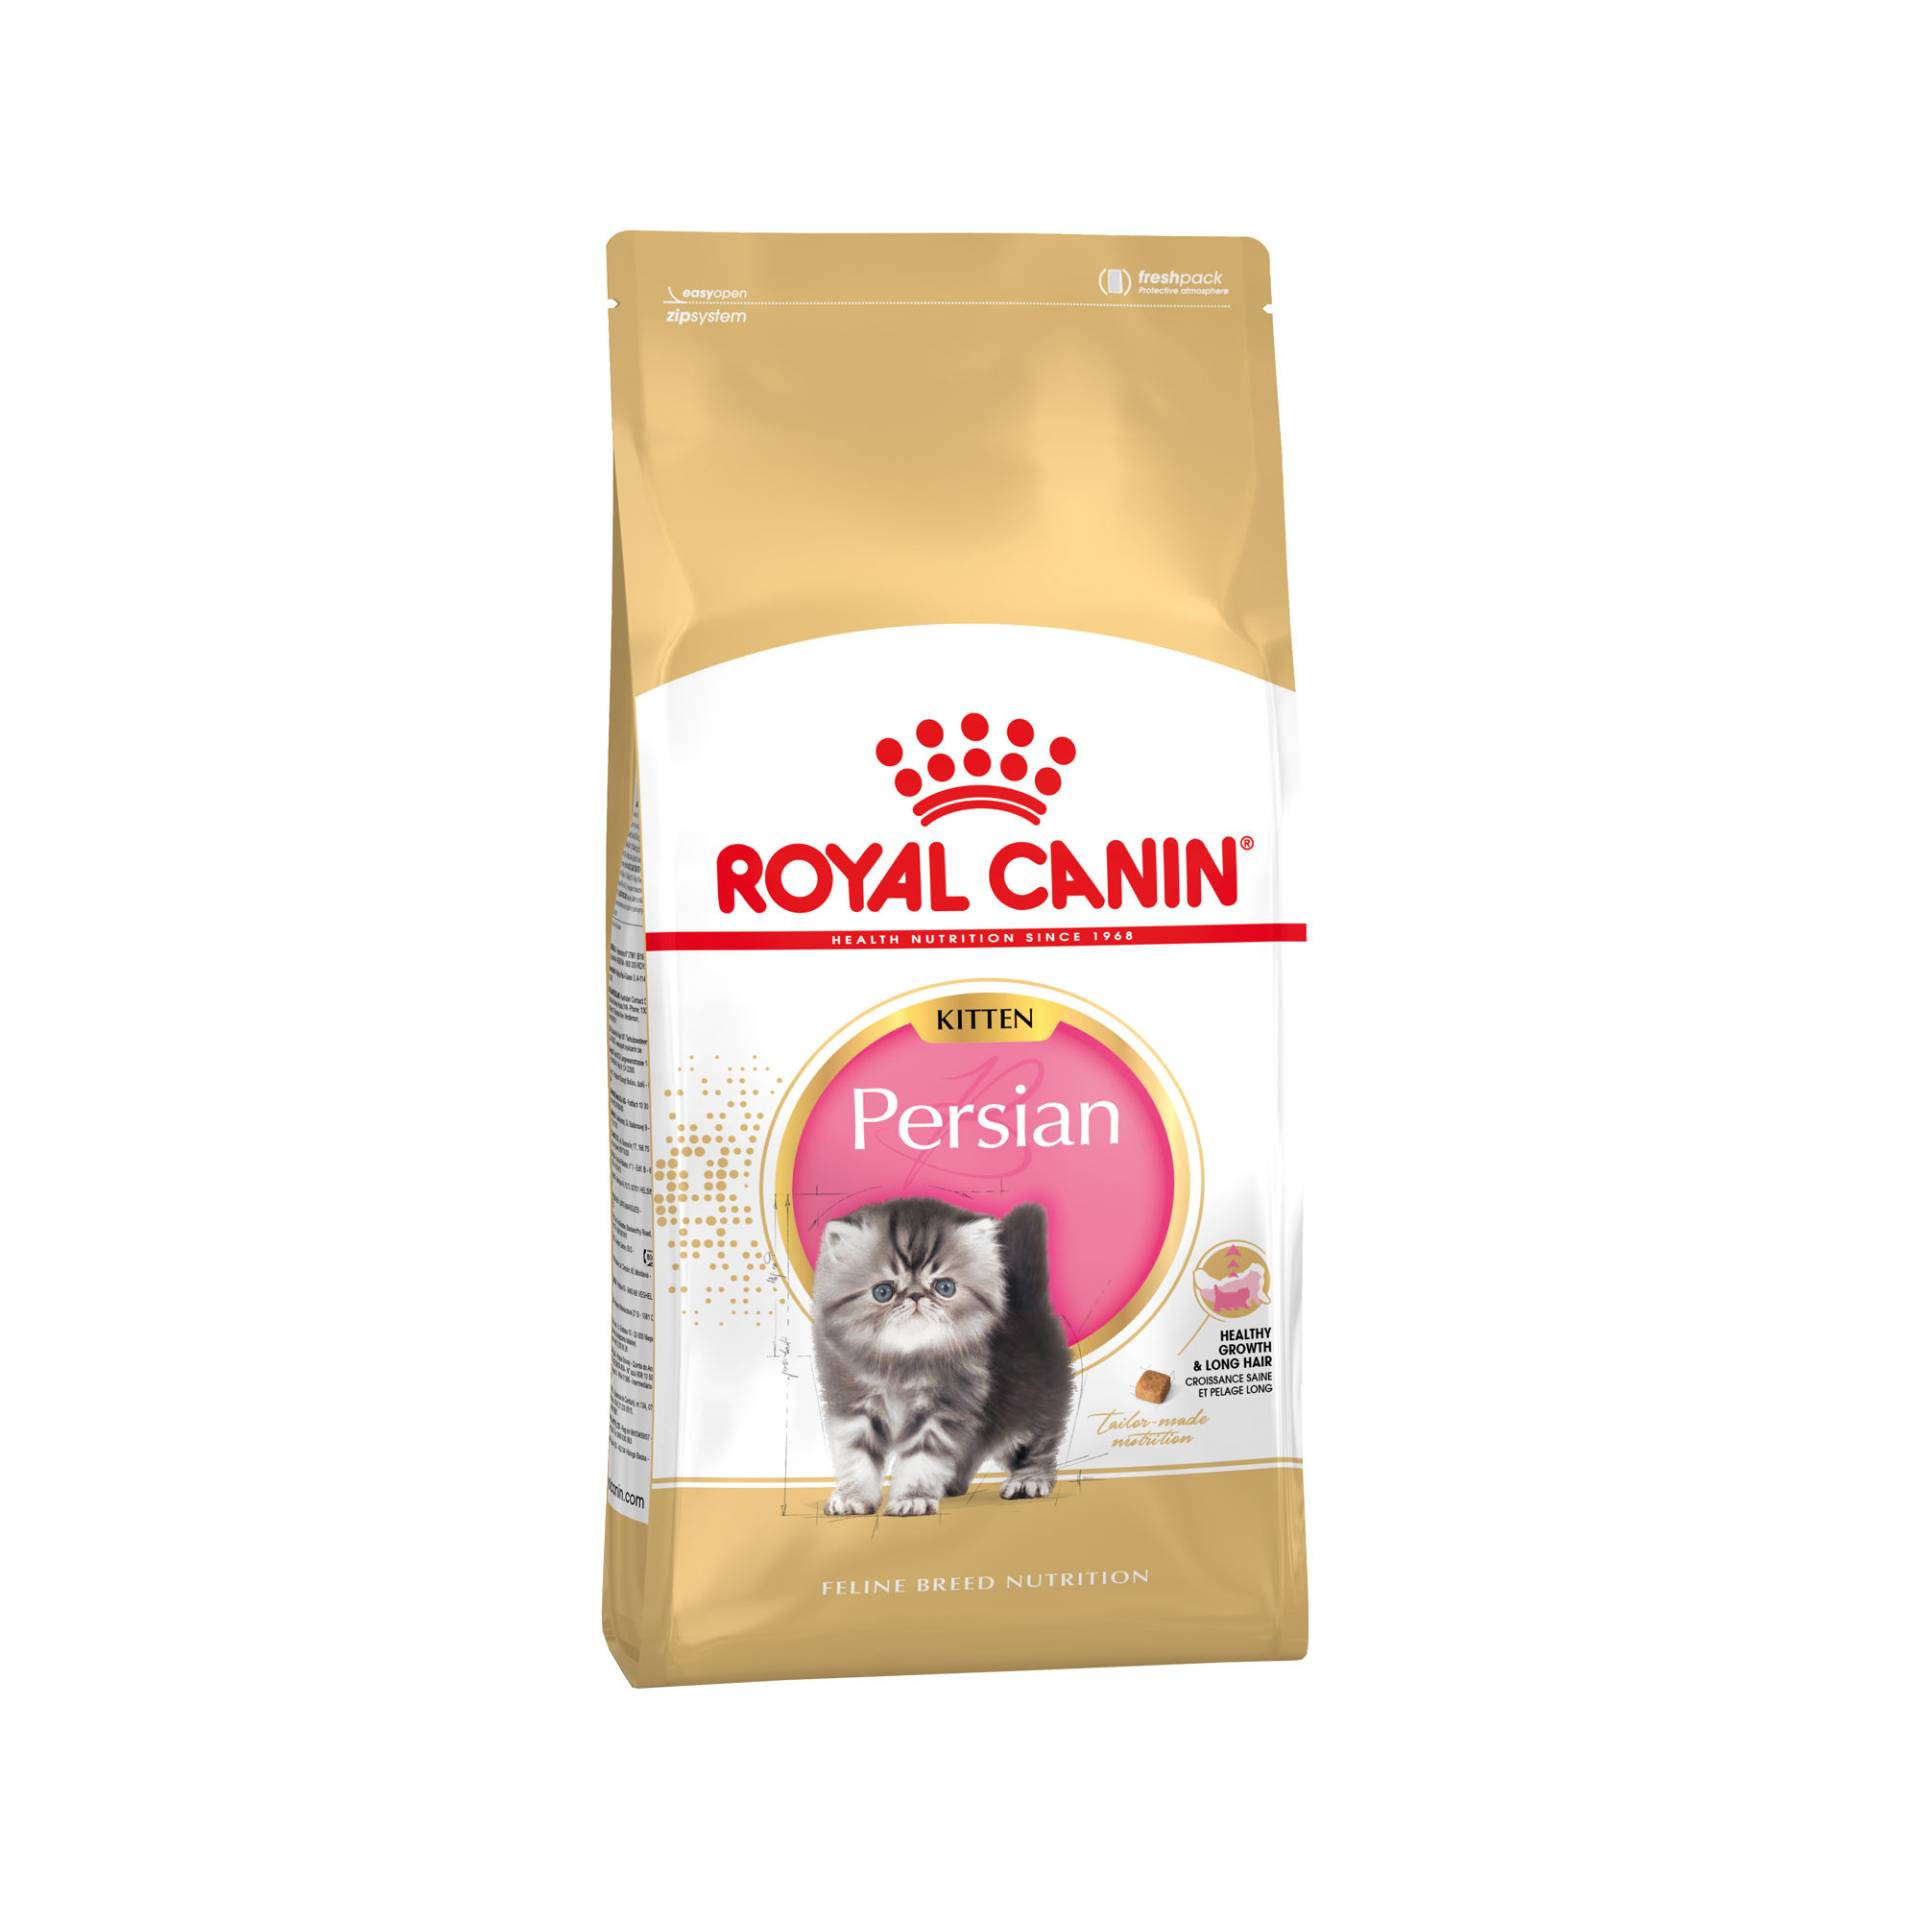 Royal Canin Persian Kitten Katzenfutter - 400 g von Royal Canin